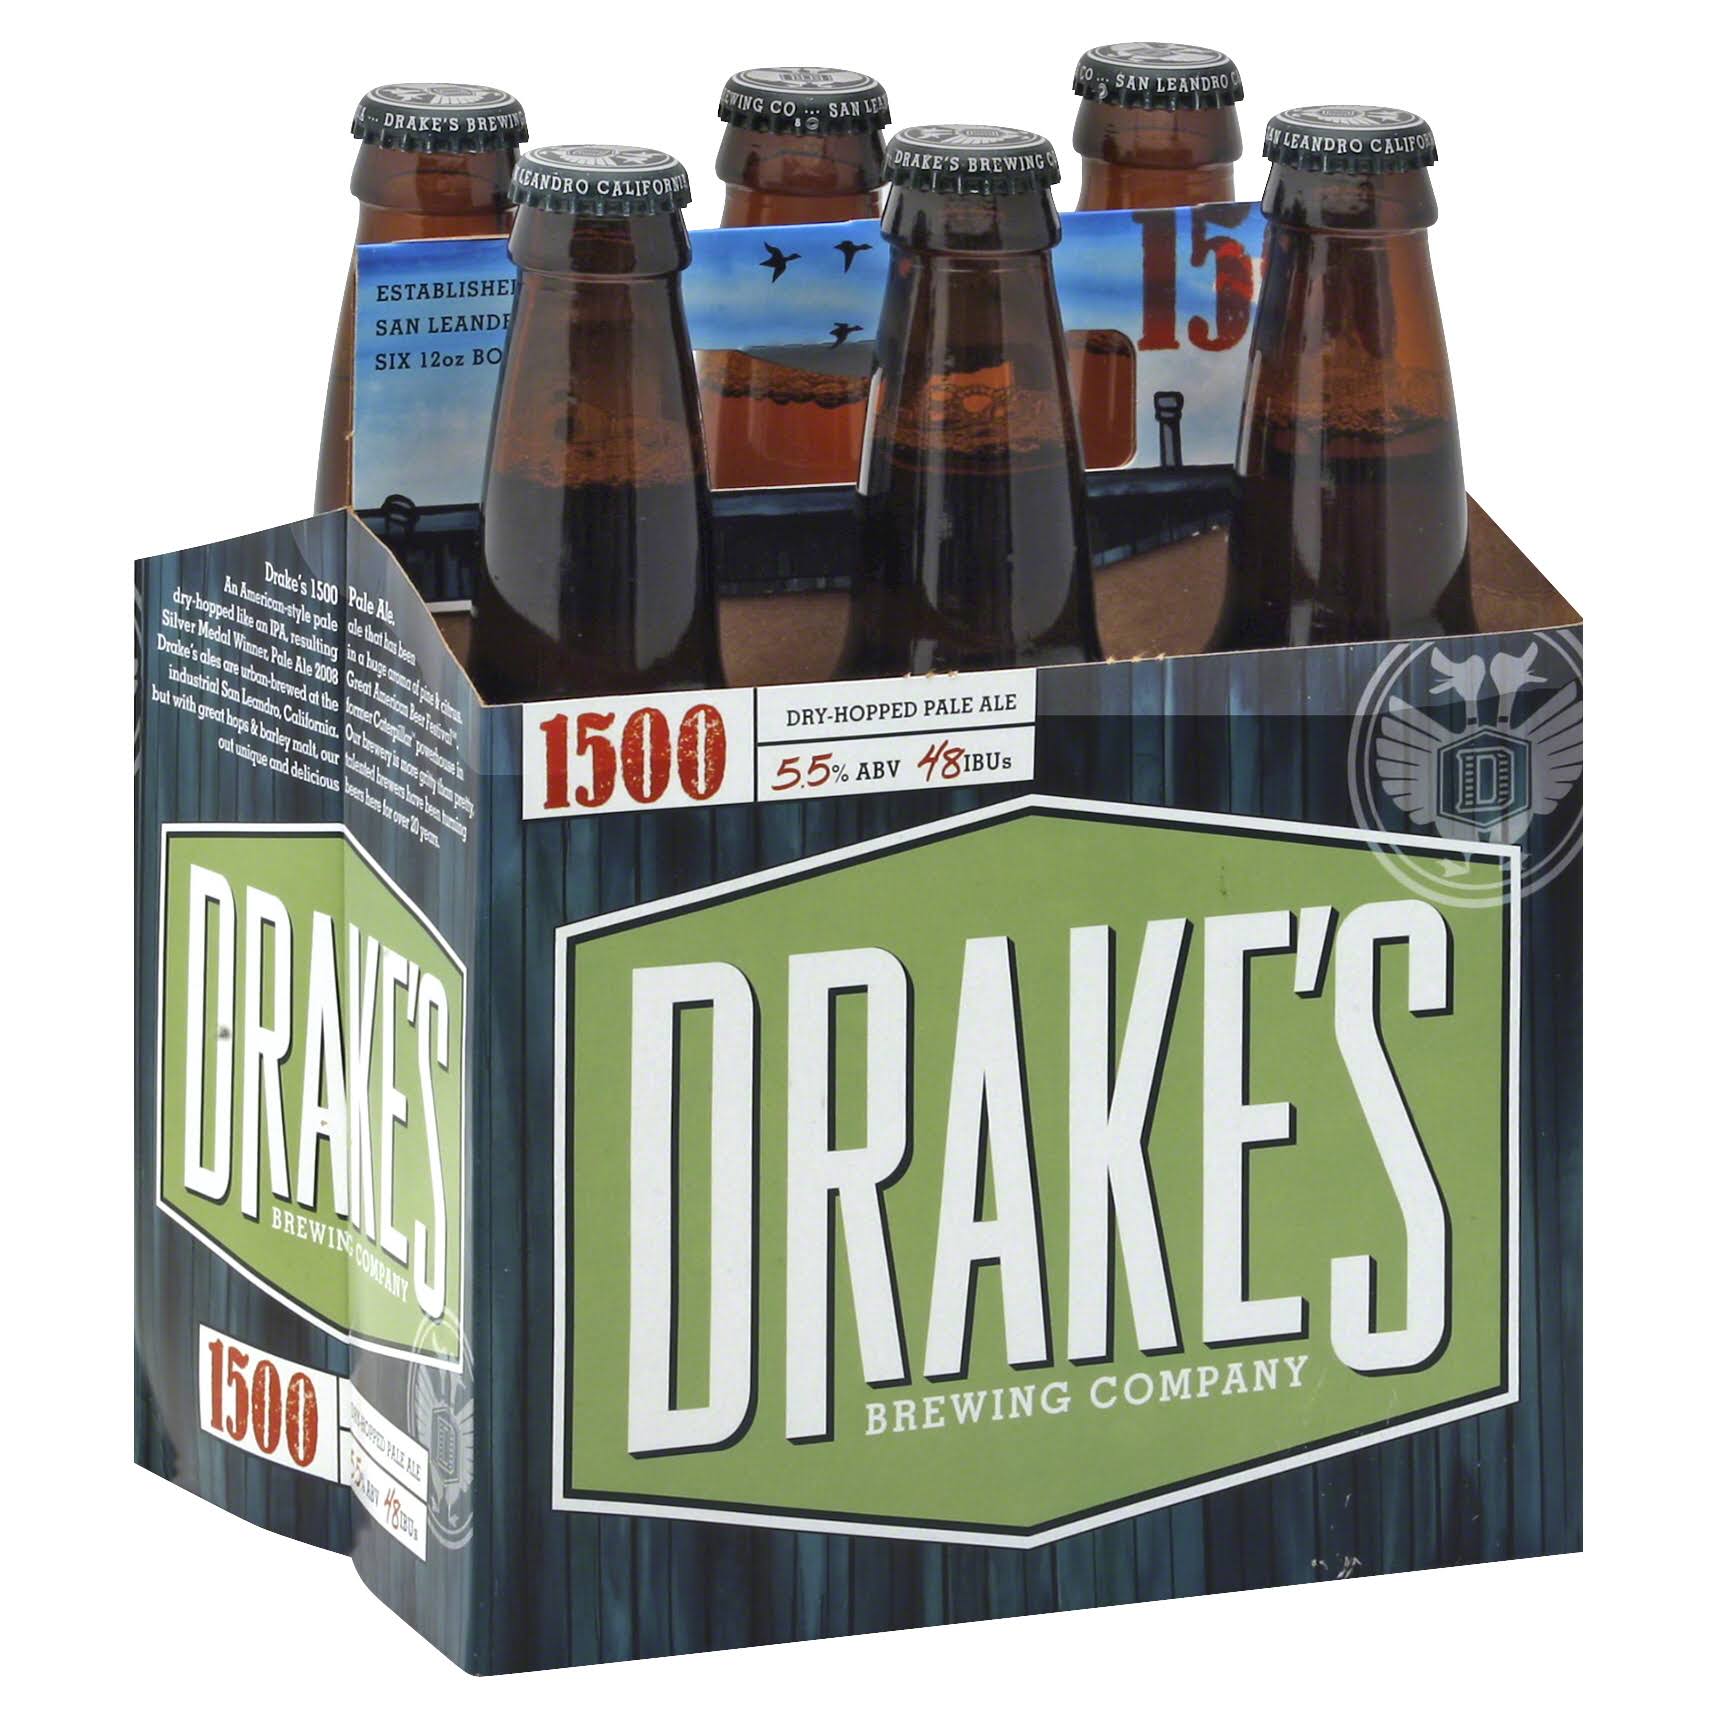 Drakes 1500 Dry-Hopped Pale Ale - 6 pack, 12 fl oz bottles